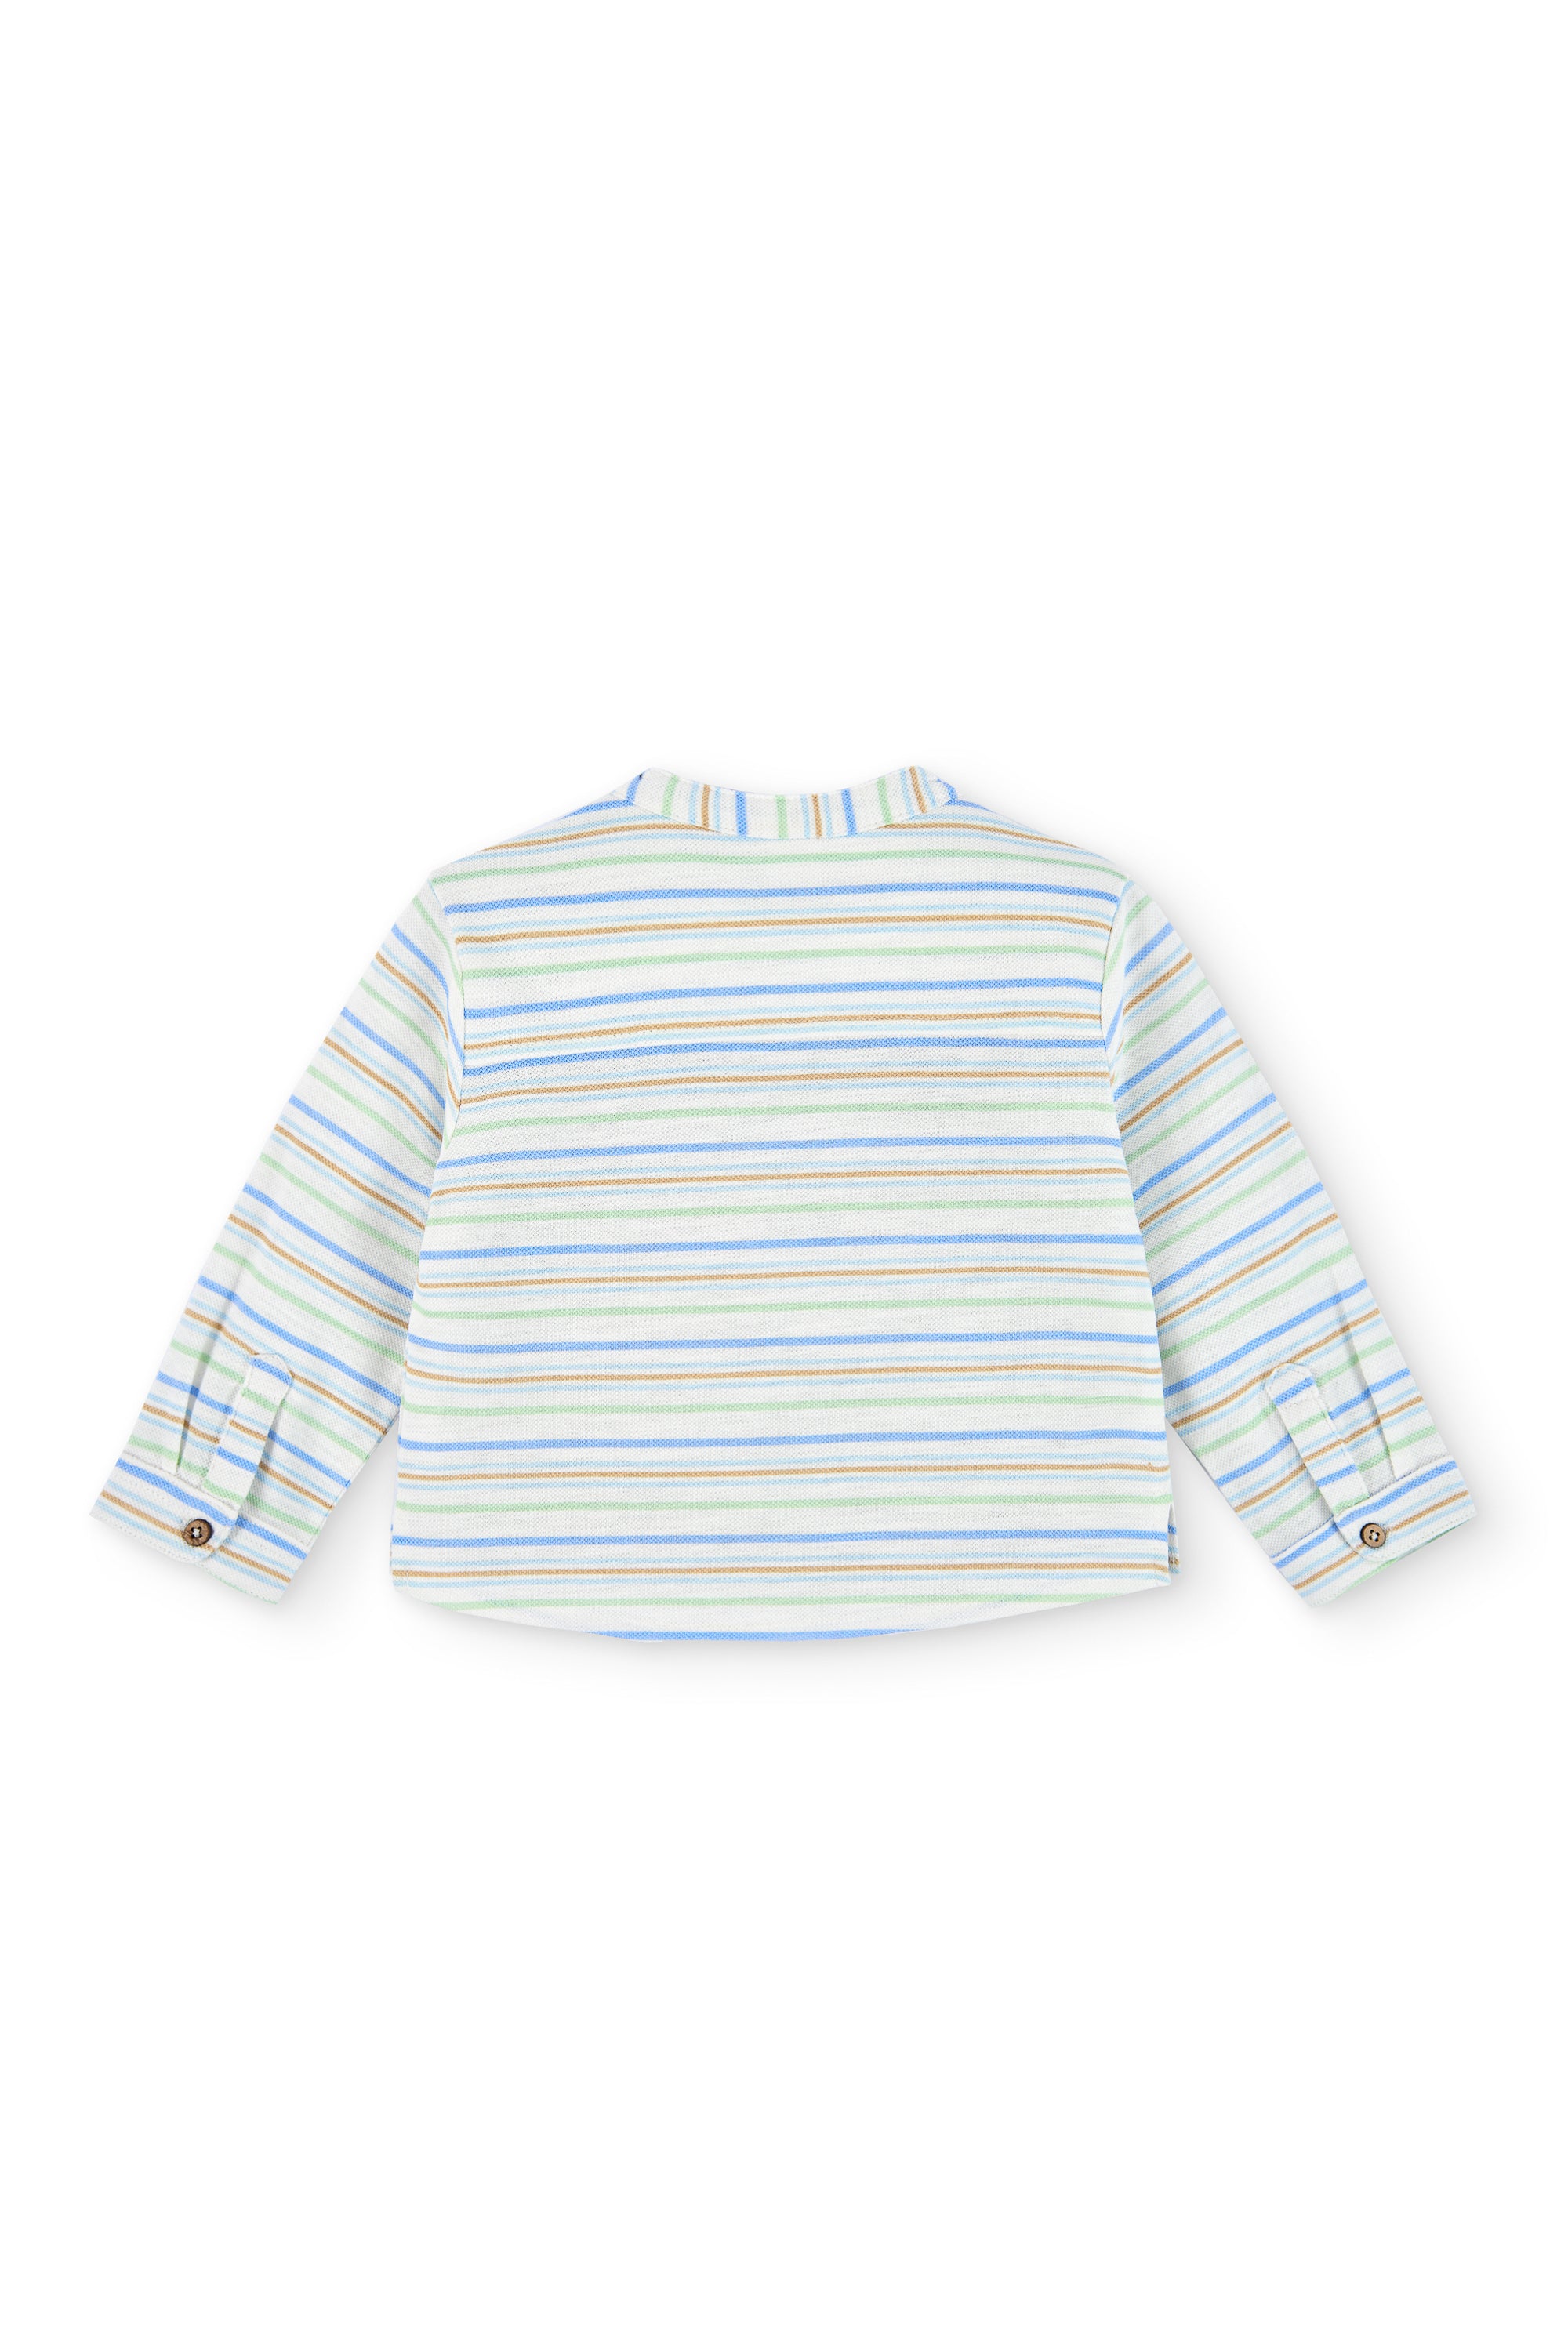 Camisa de bebé listado VERANO/Outlet